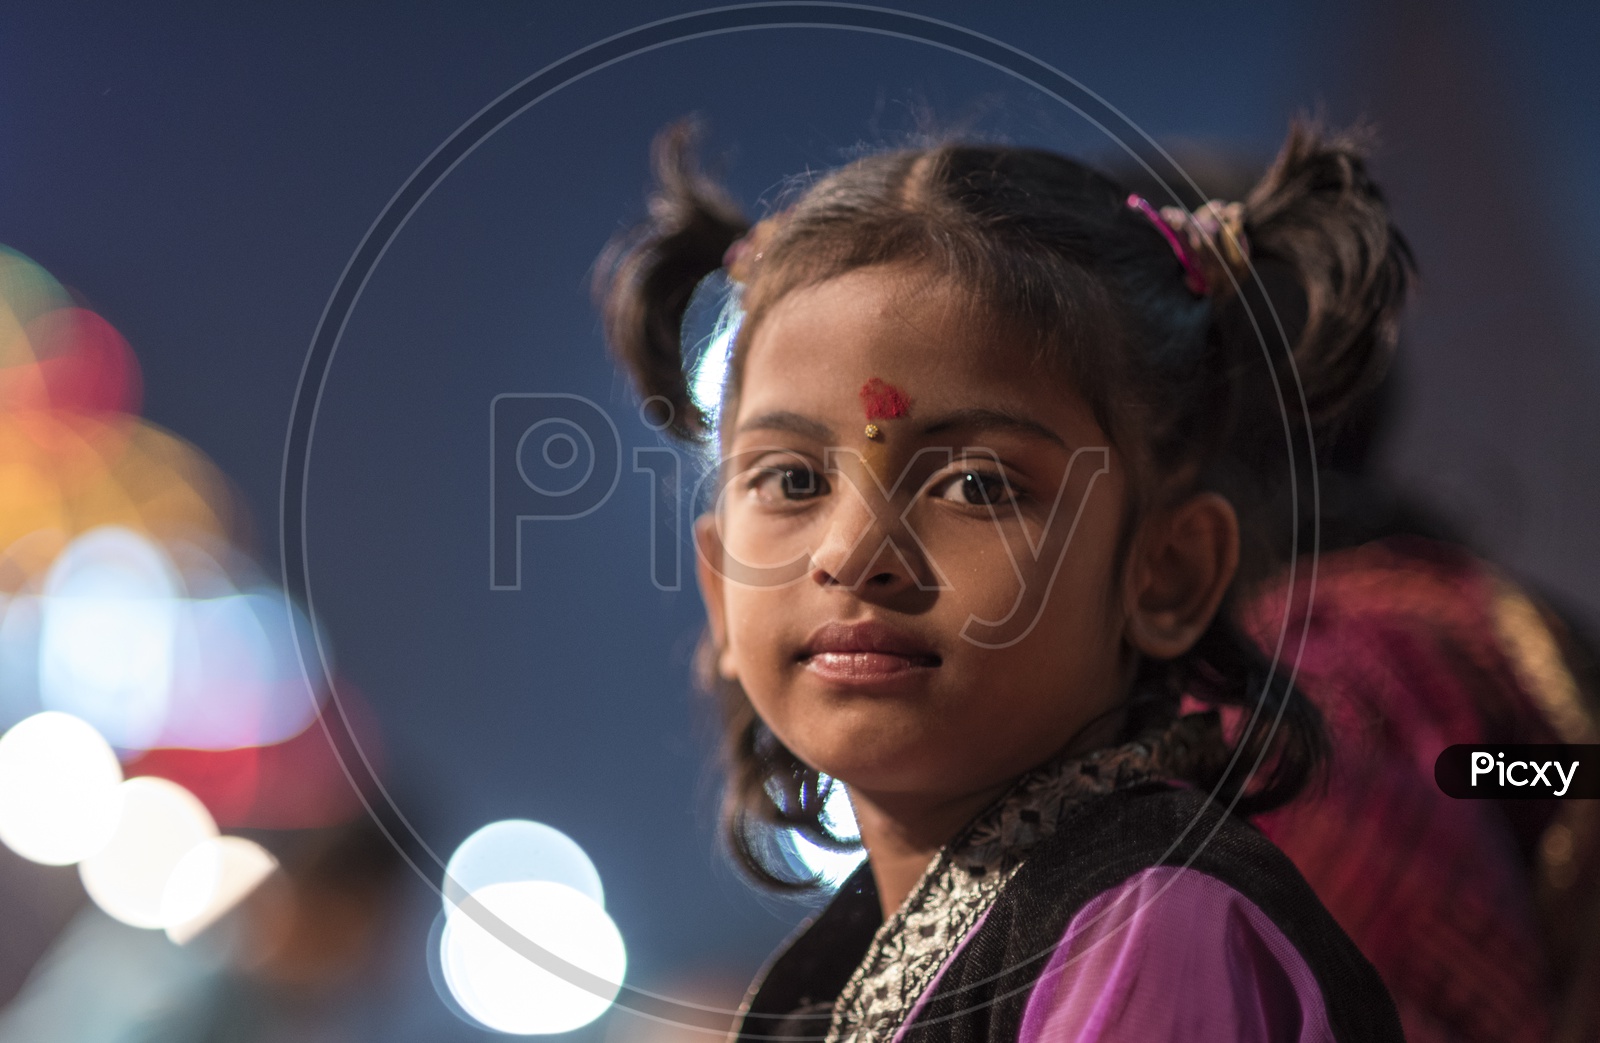 Portrait Of a Girl Child in varanasi